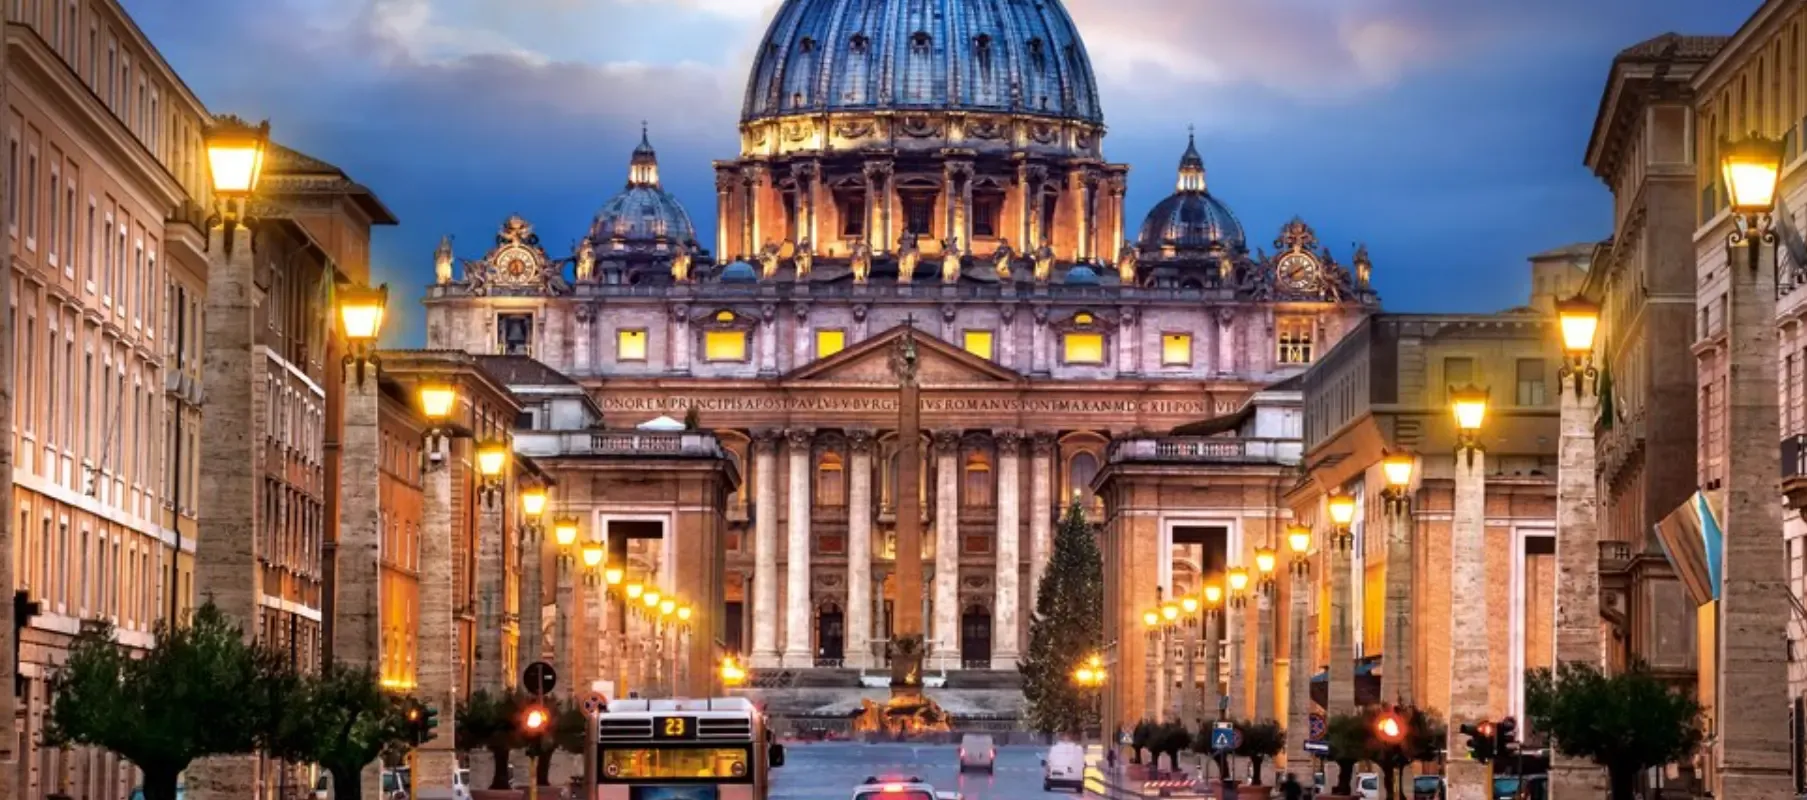 Poster St Peter's Basilica